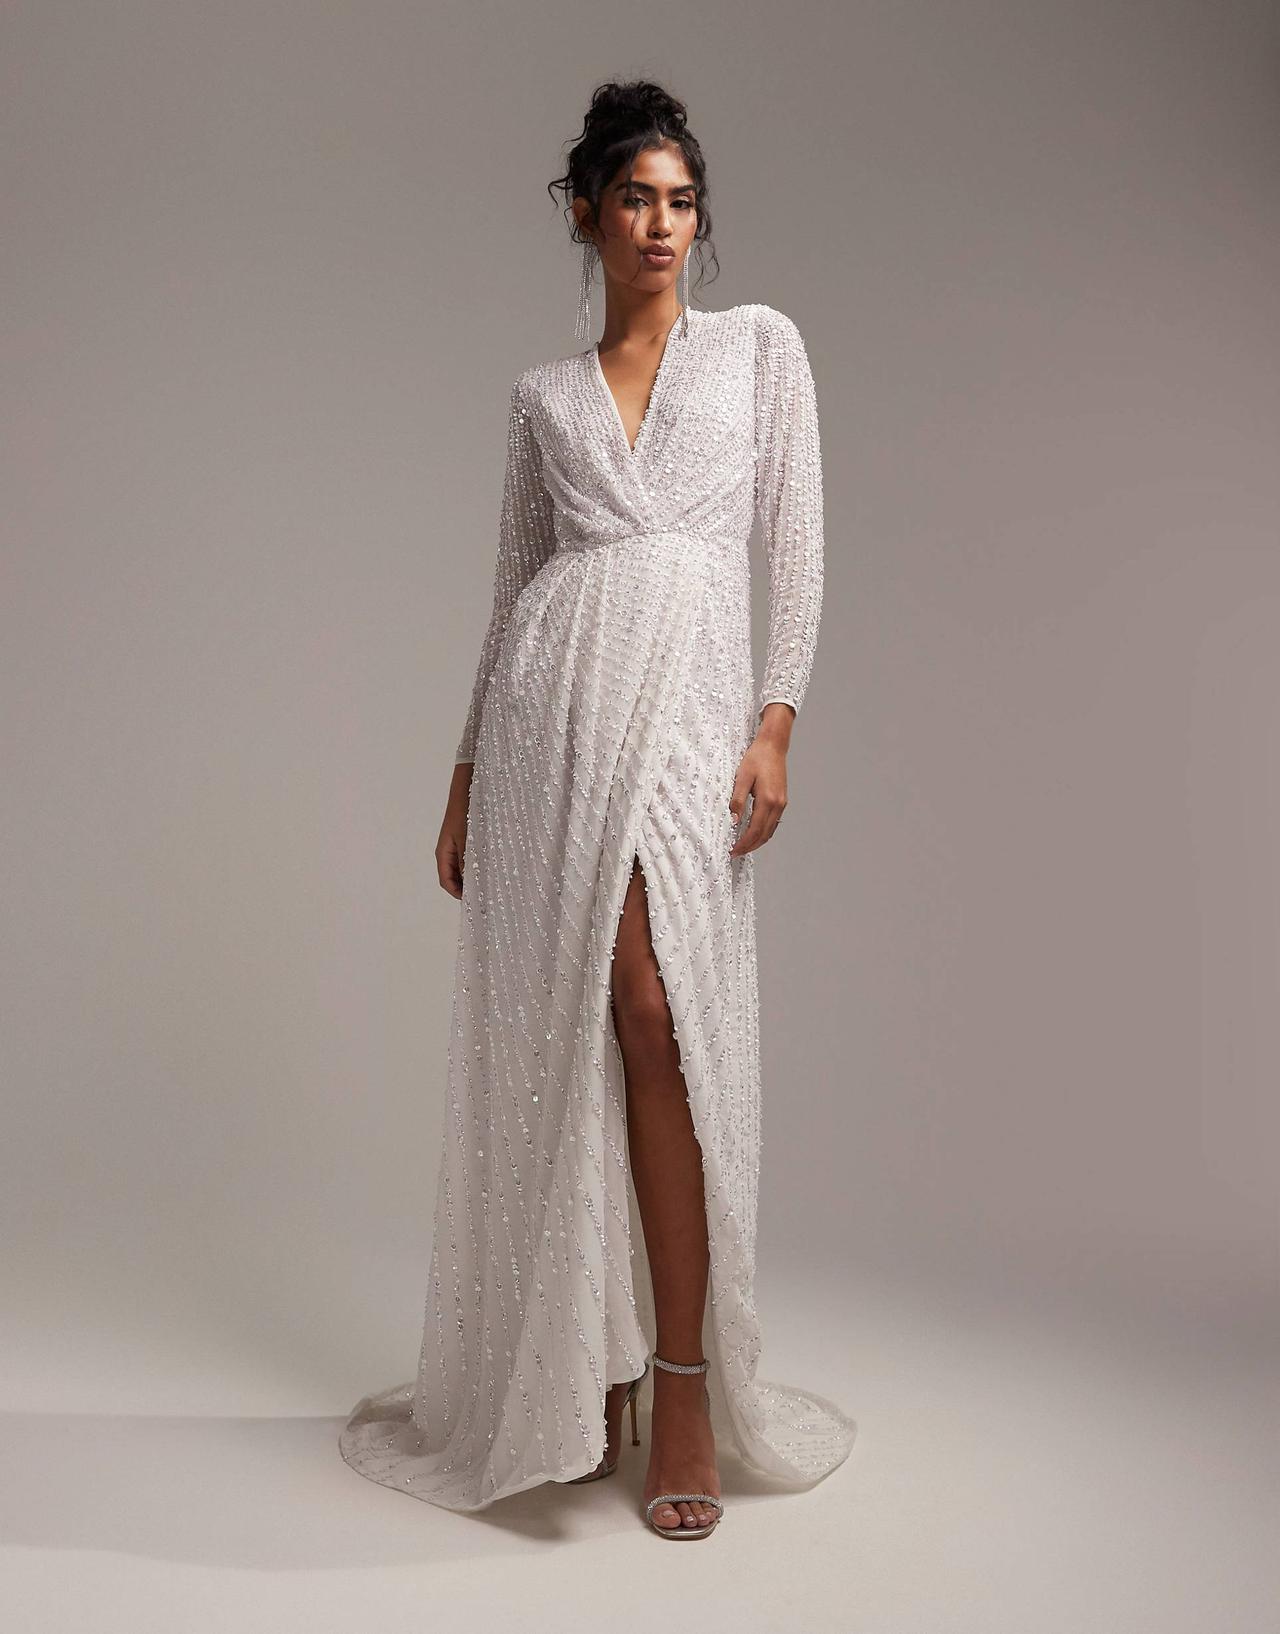 30 Wrap Dresses ideas  fashion dresses, dresses, fashion outfits